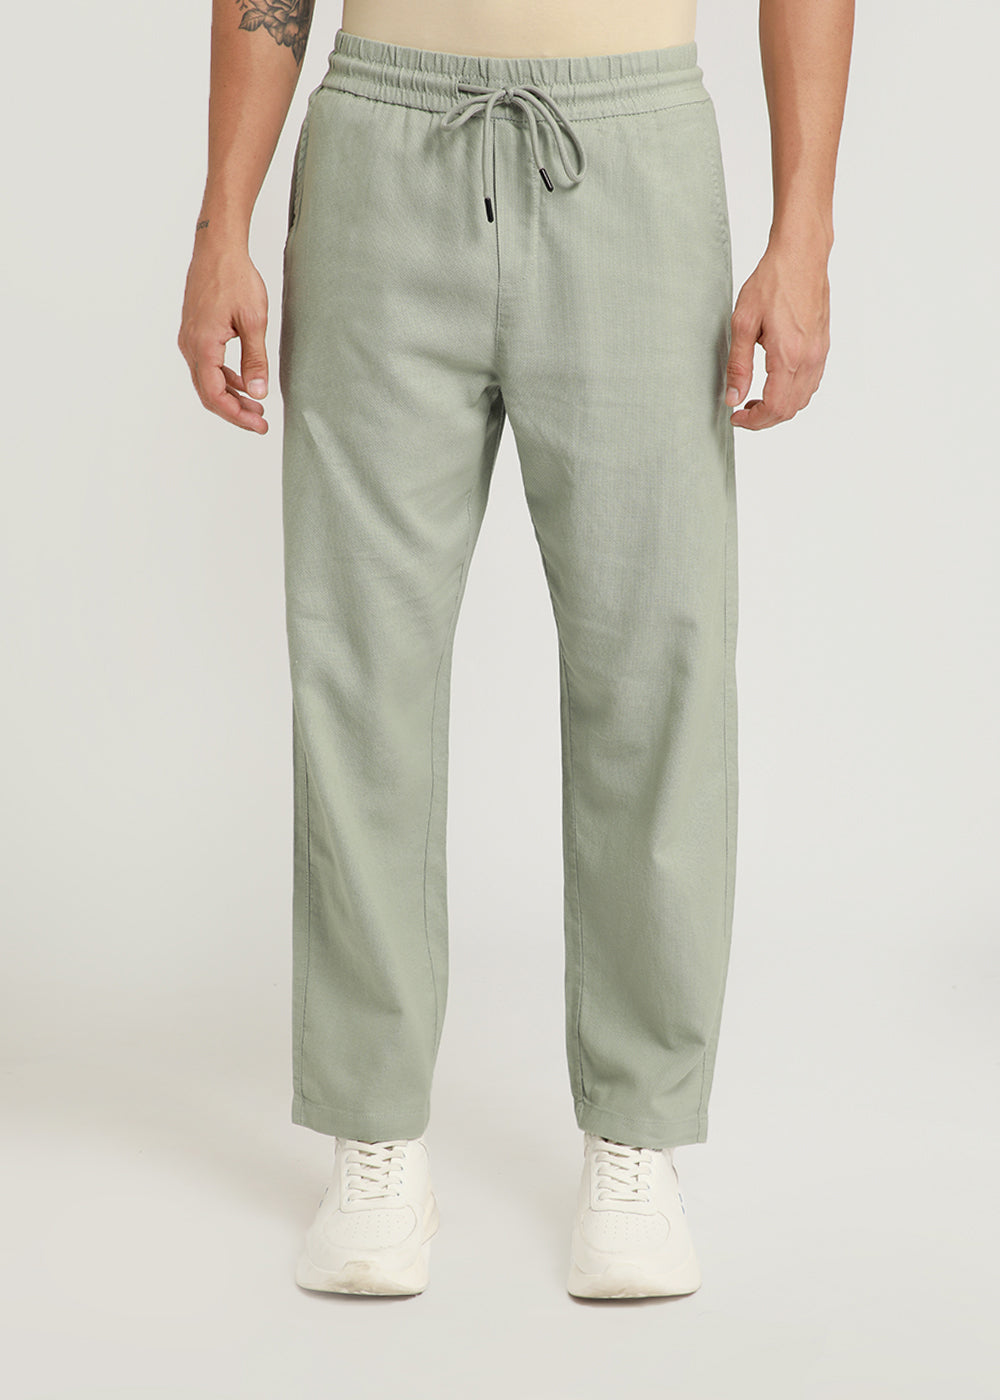 Pastel Green Textured Pants